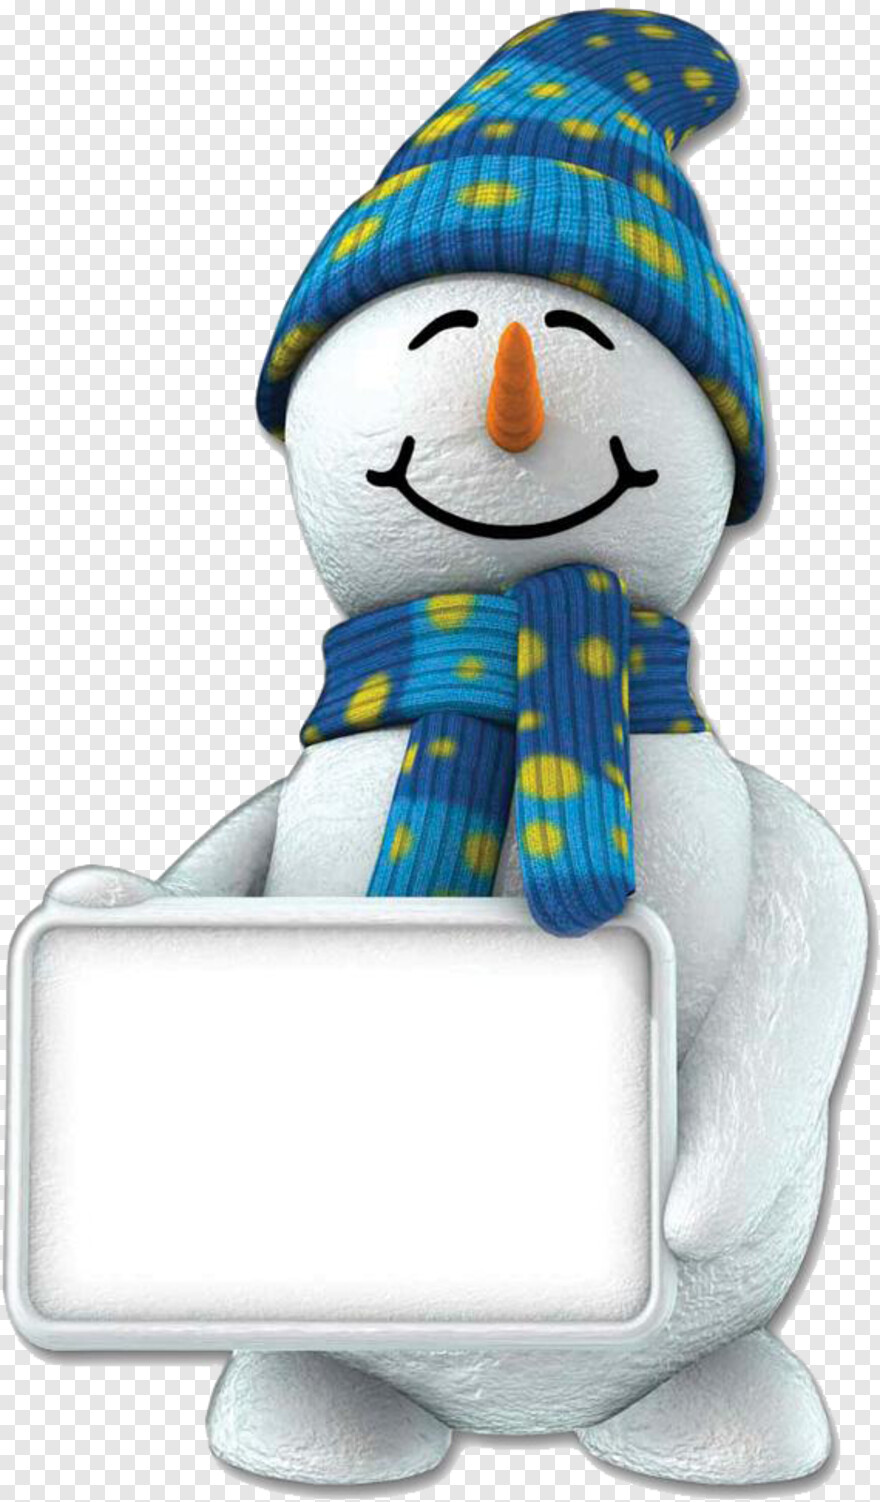  Snowman Clipart, Abominable Snowman, Snowman, Frosty The Snowman, Cute Snowman